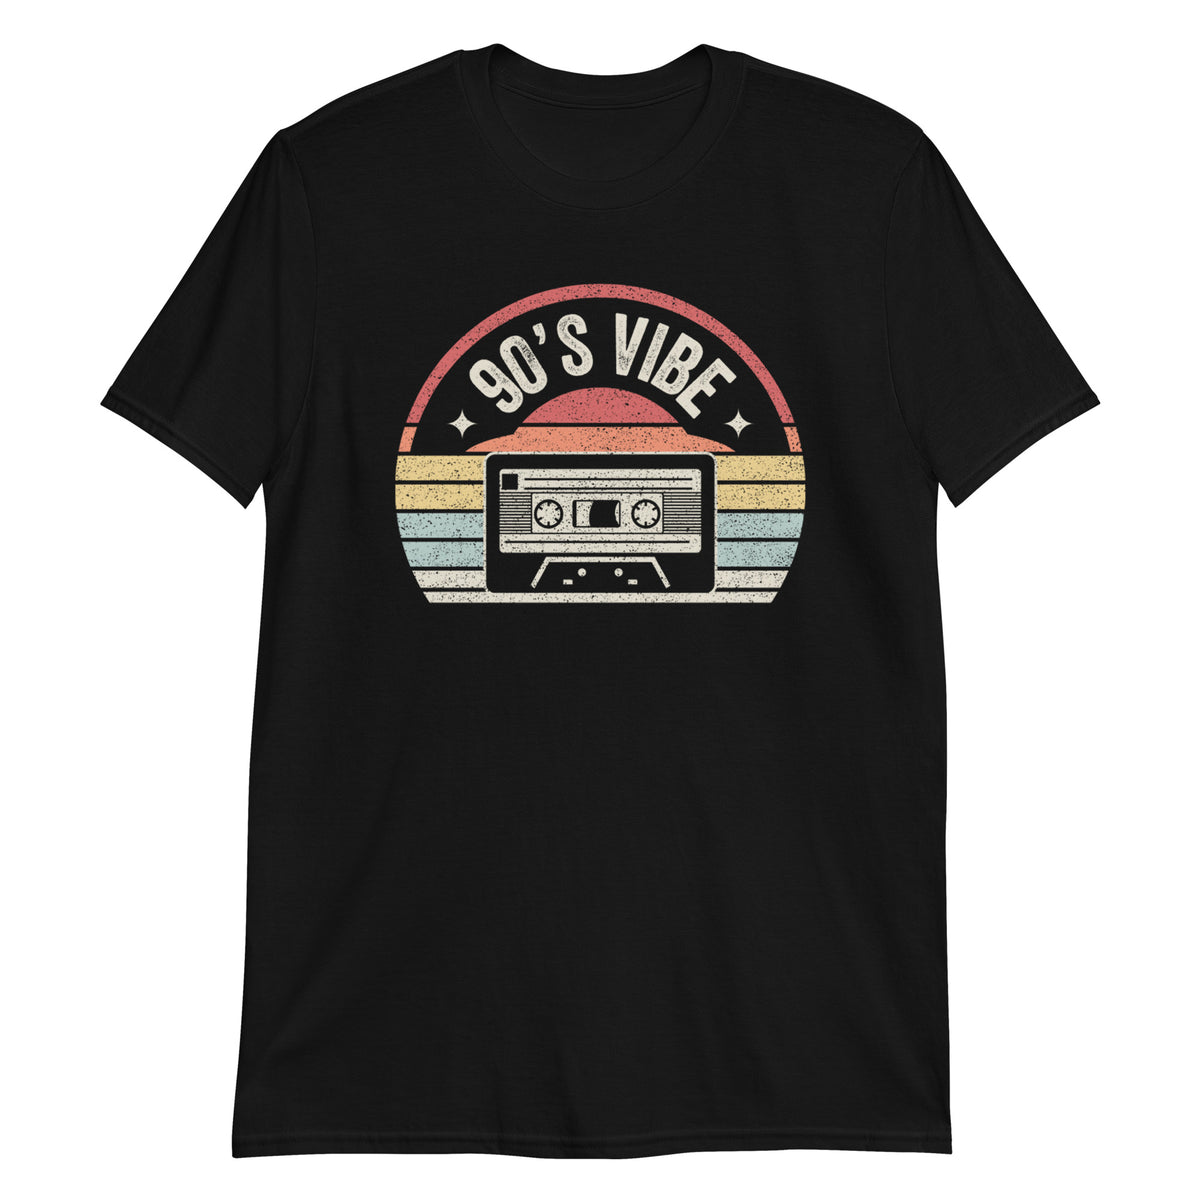 90s Vibes T-Shirt